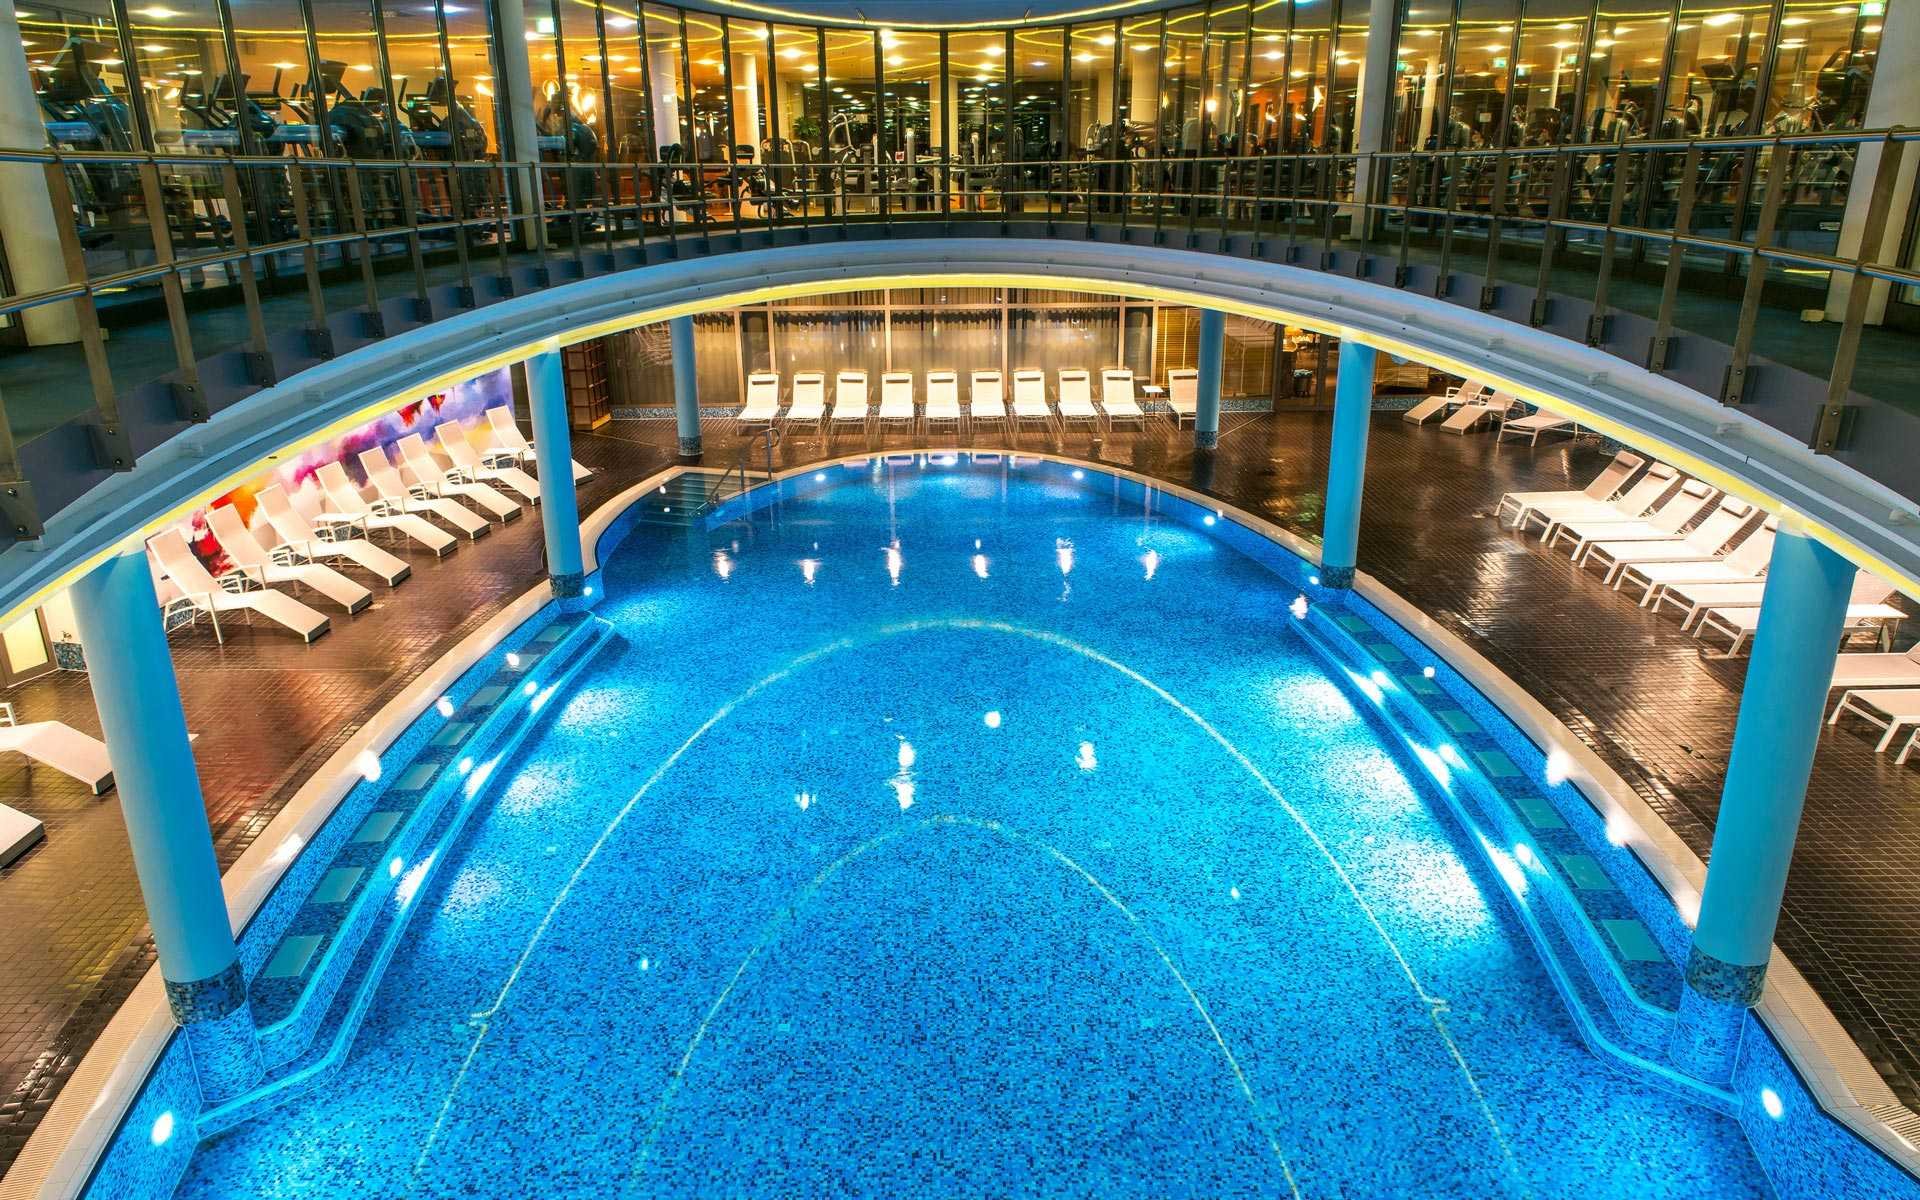 25 Quadratmeter-Pool im centrovital Wellnesshotel Berlin-Spandau